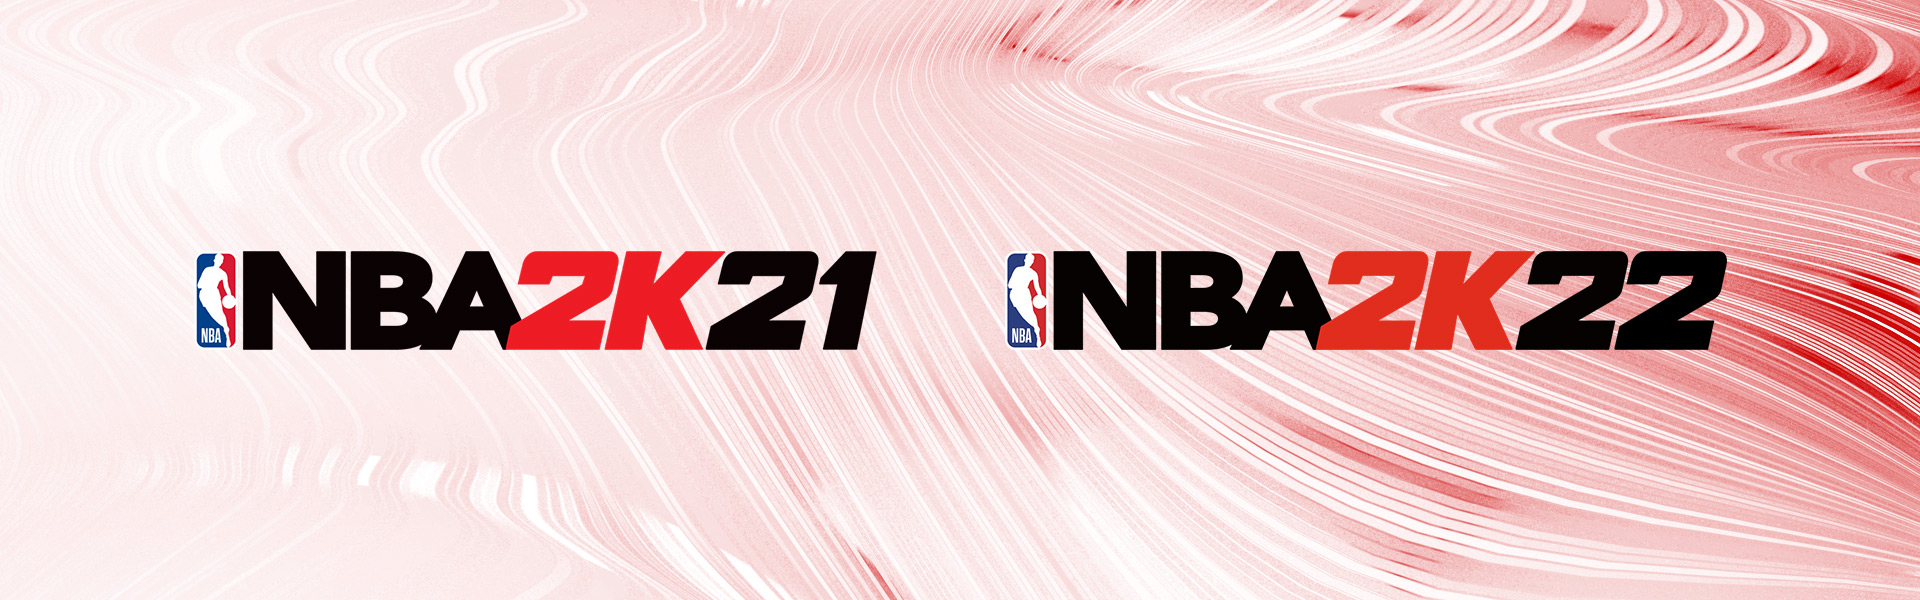 NBA2K21-22_Banner